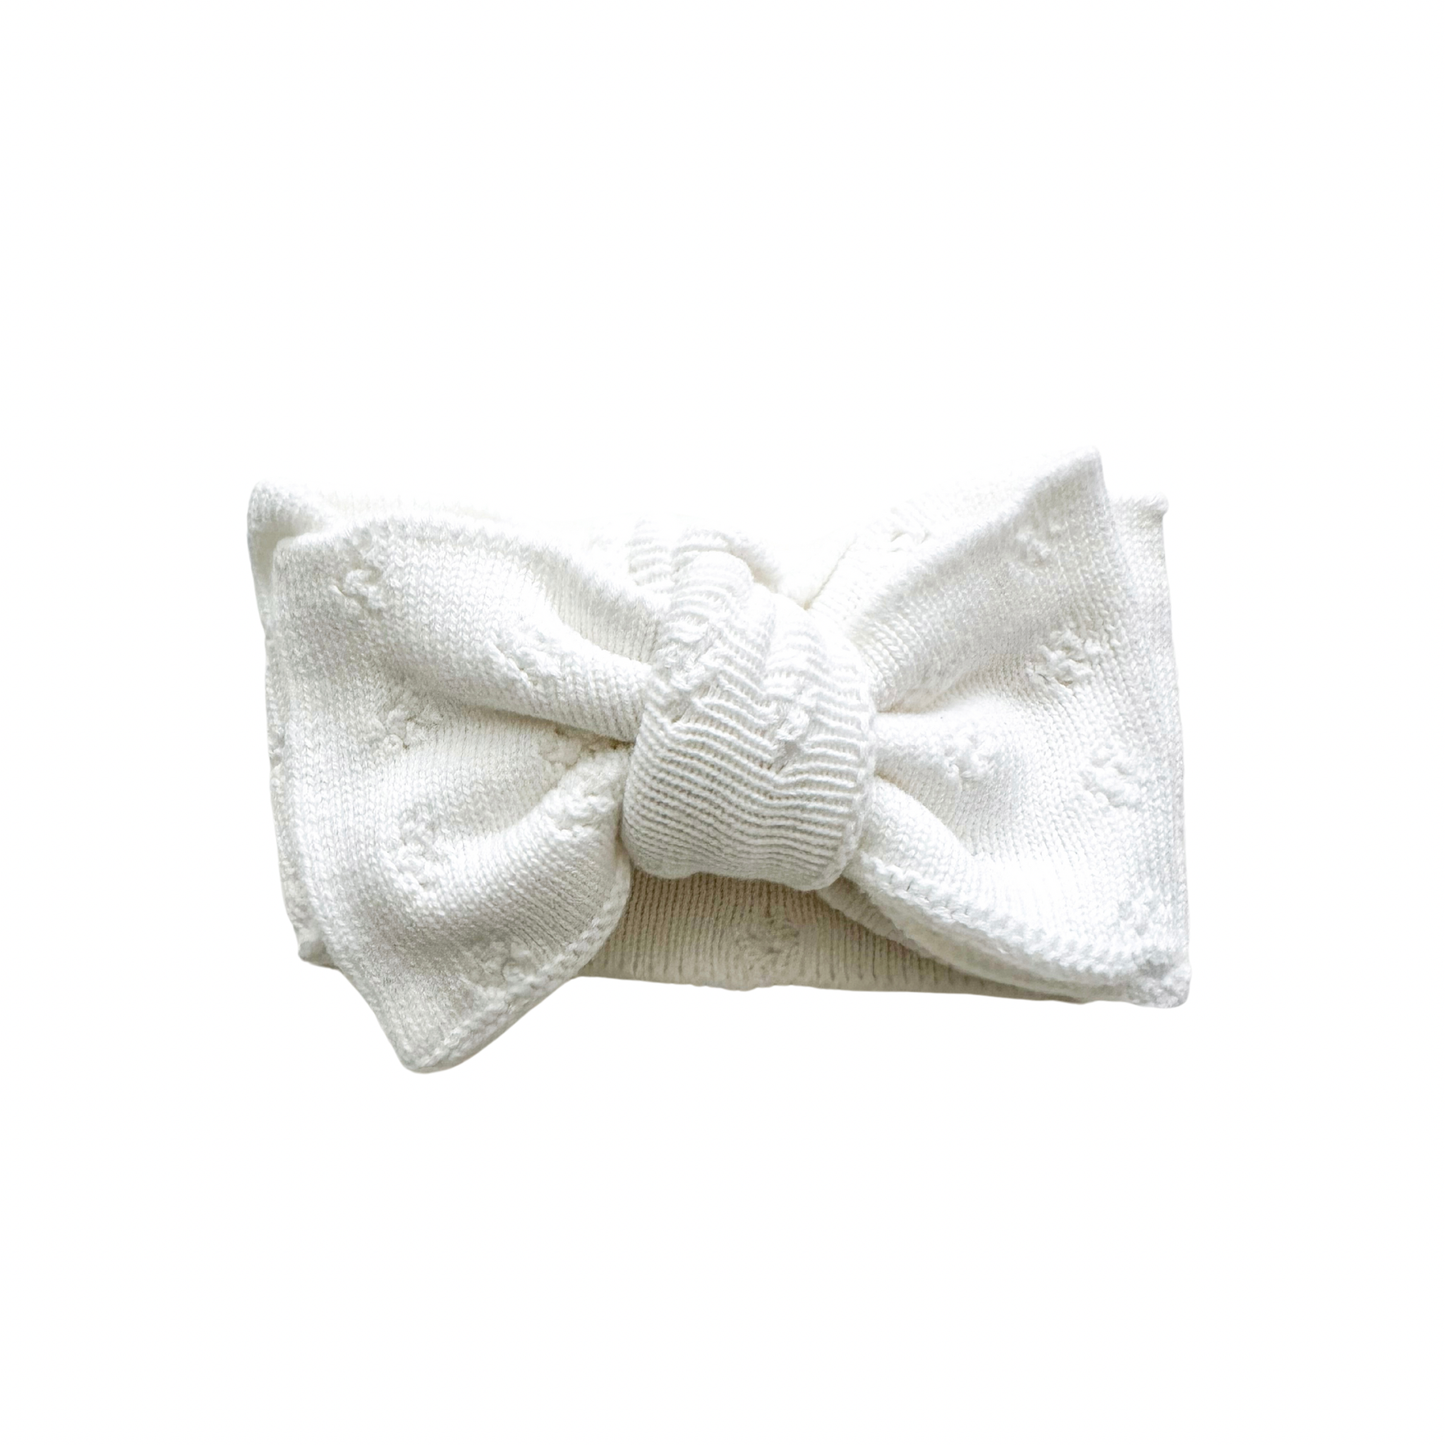 Oversized Bow Headband - White Pointelle Knit